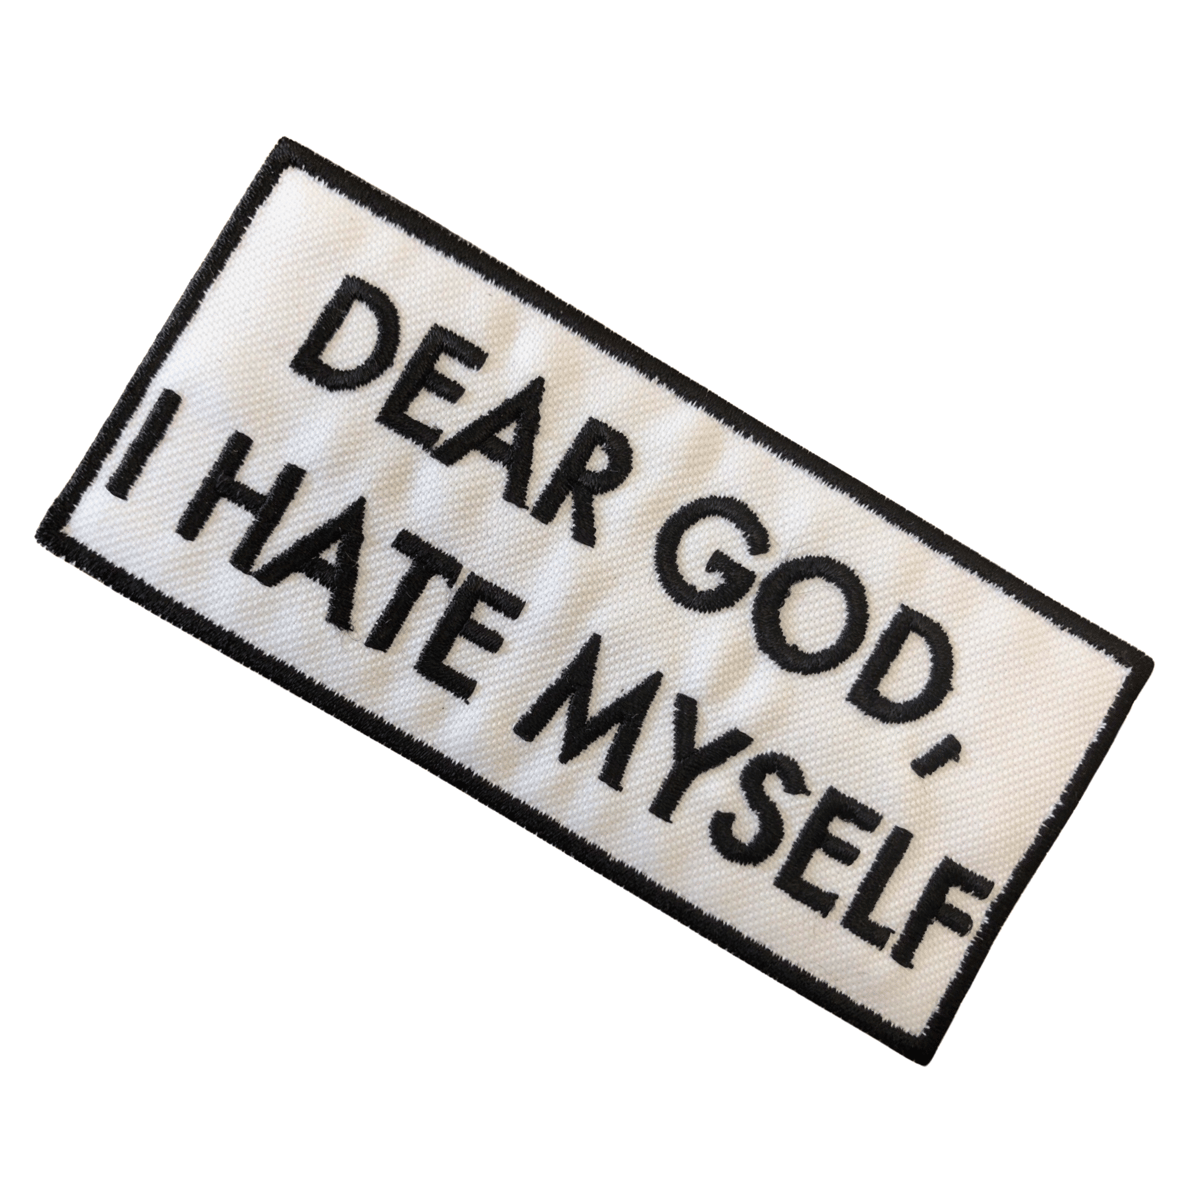 Dear God, I Hate Myself (patch)